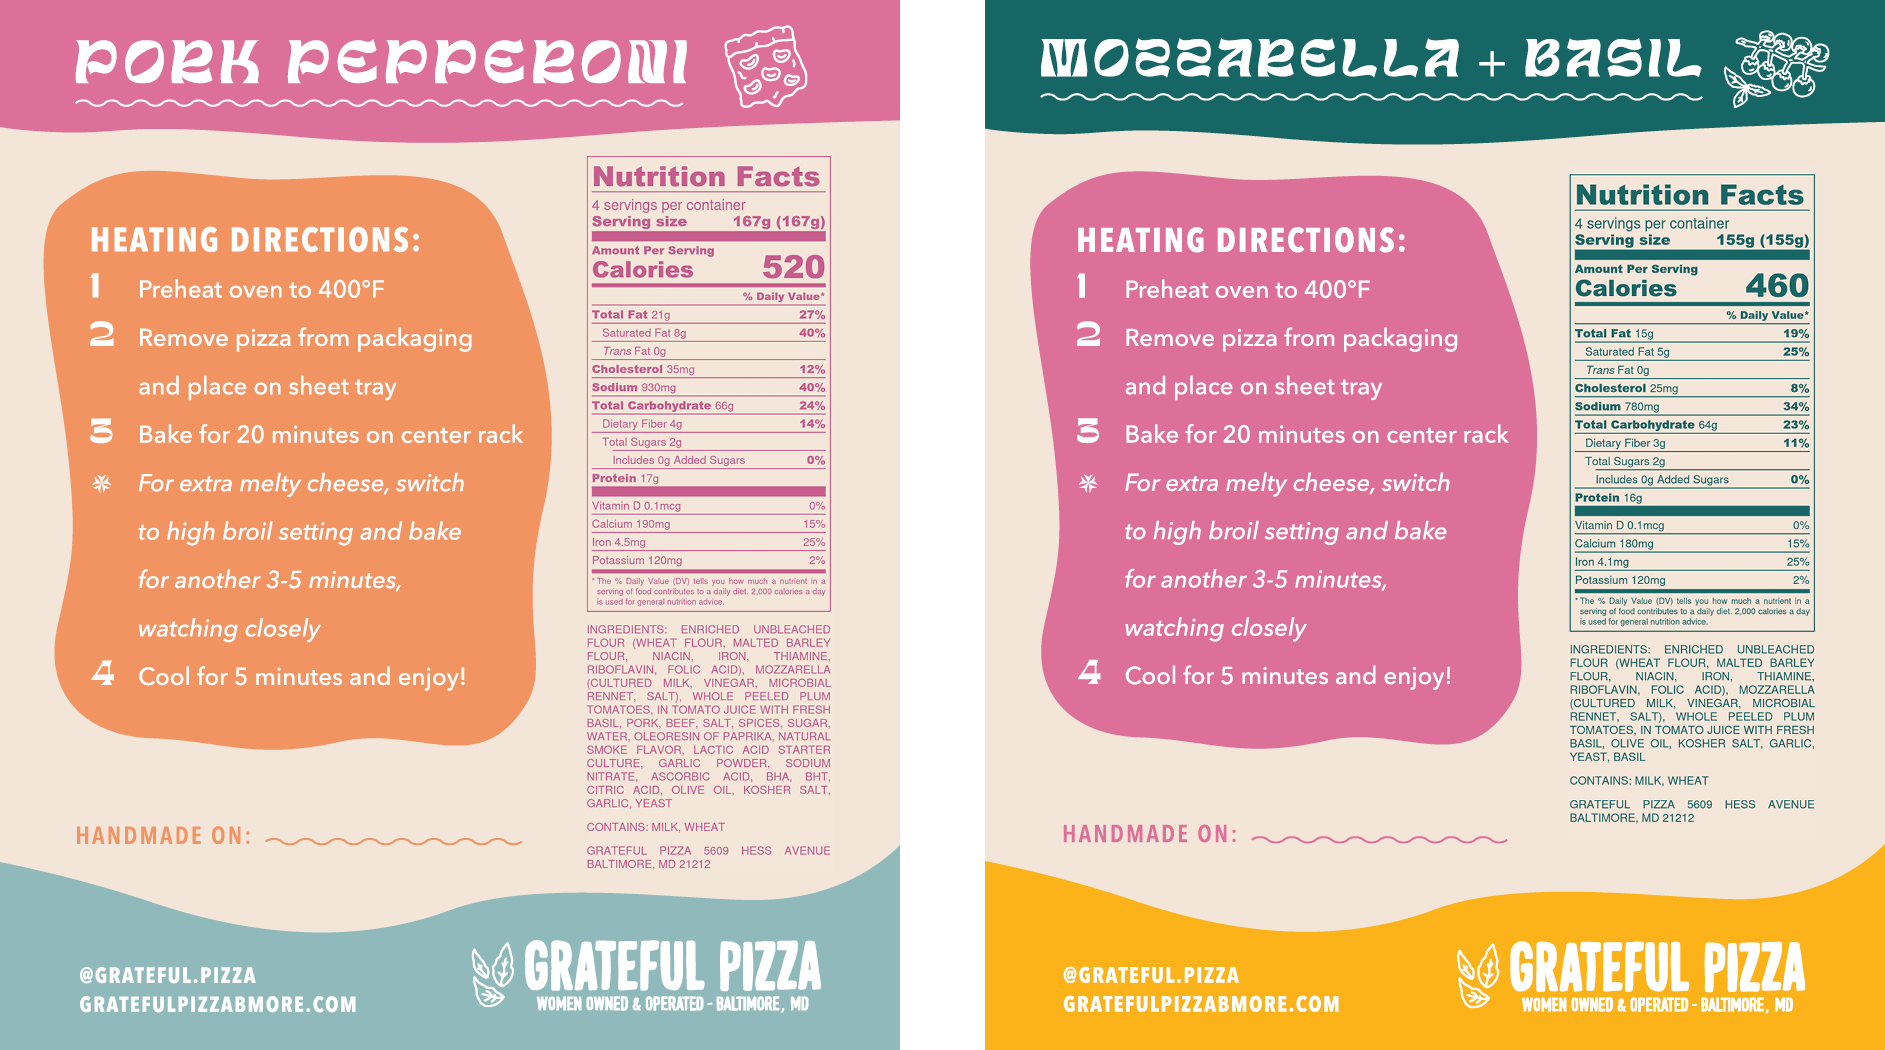 Grateful Pizza labels